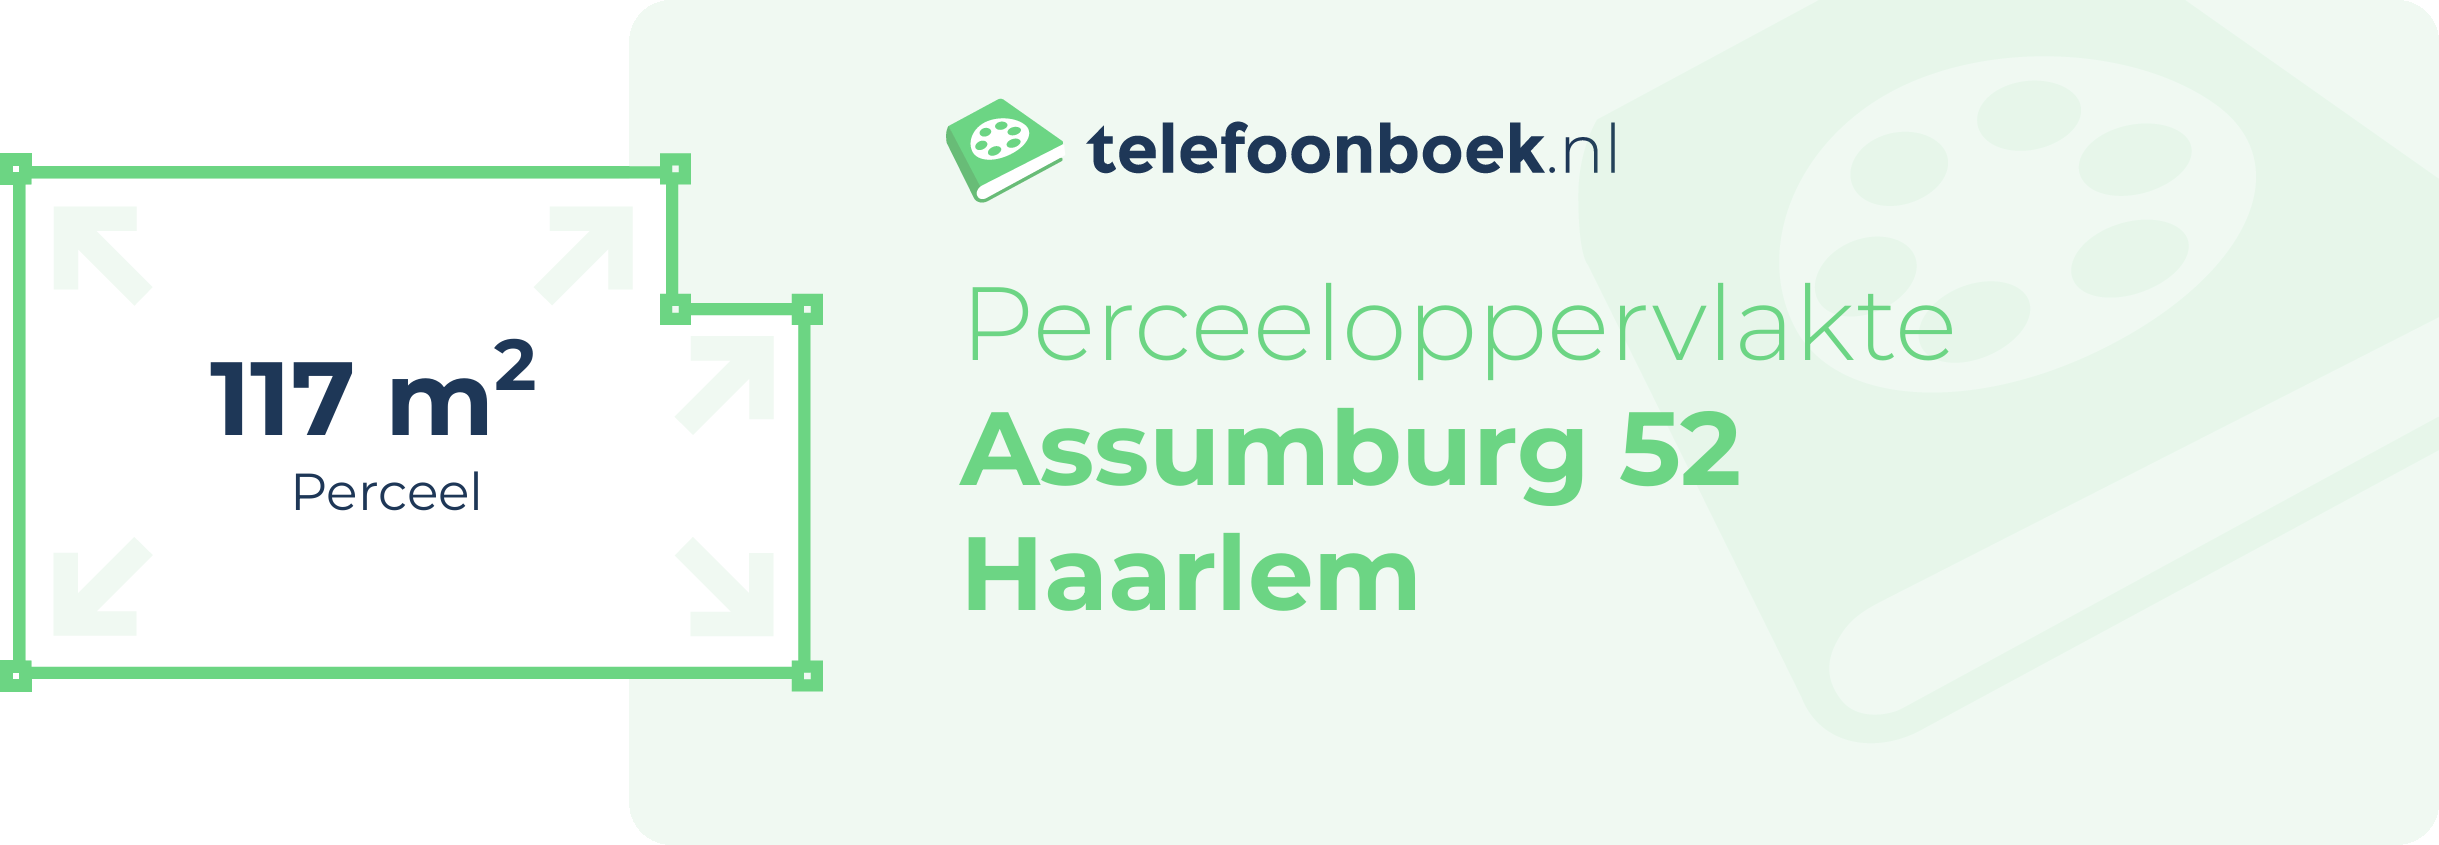 Perceeloppervlakte Assumburg 52 Haarlem